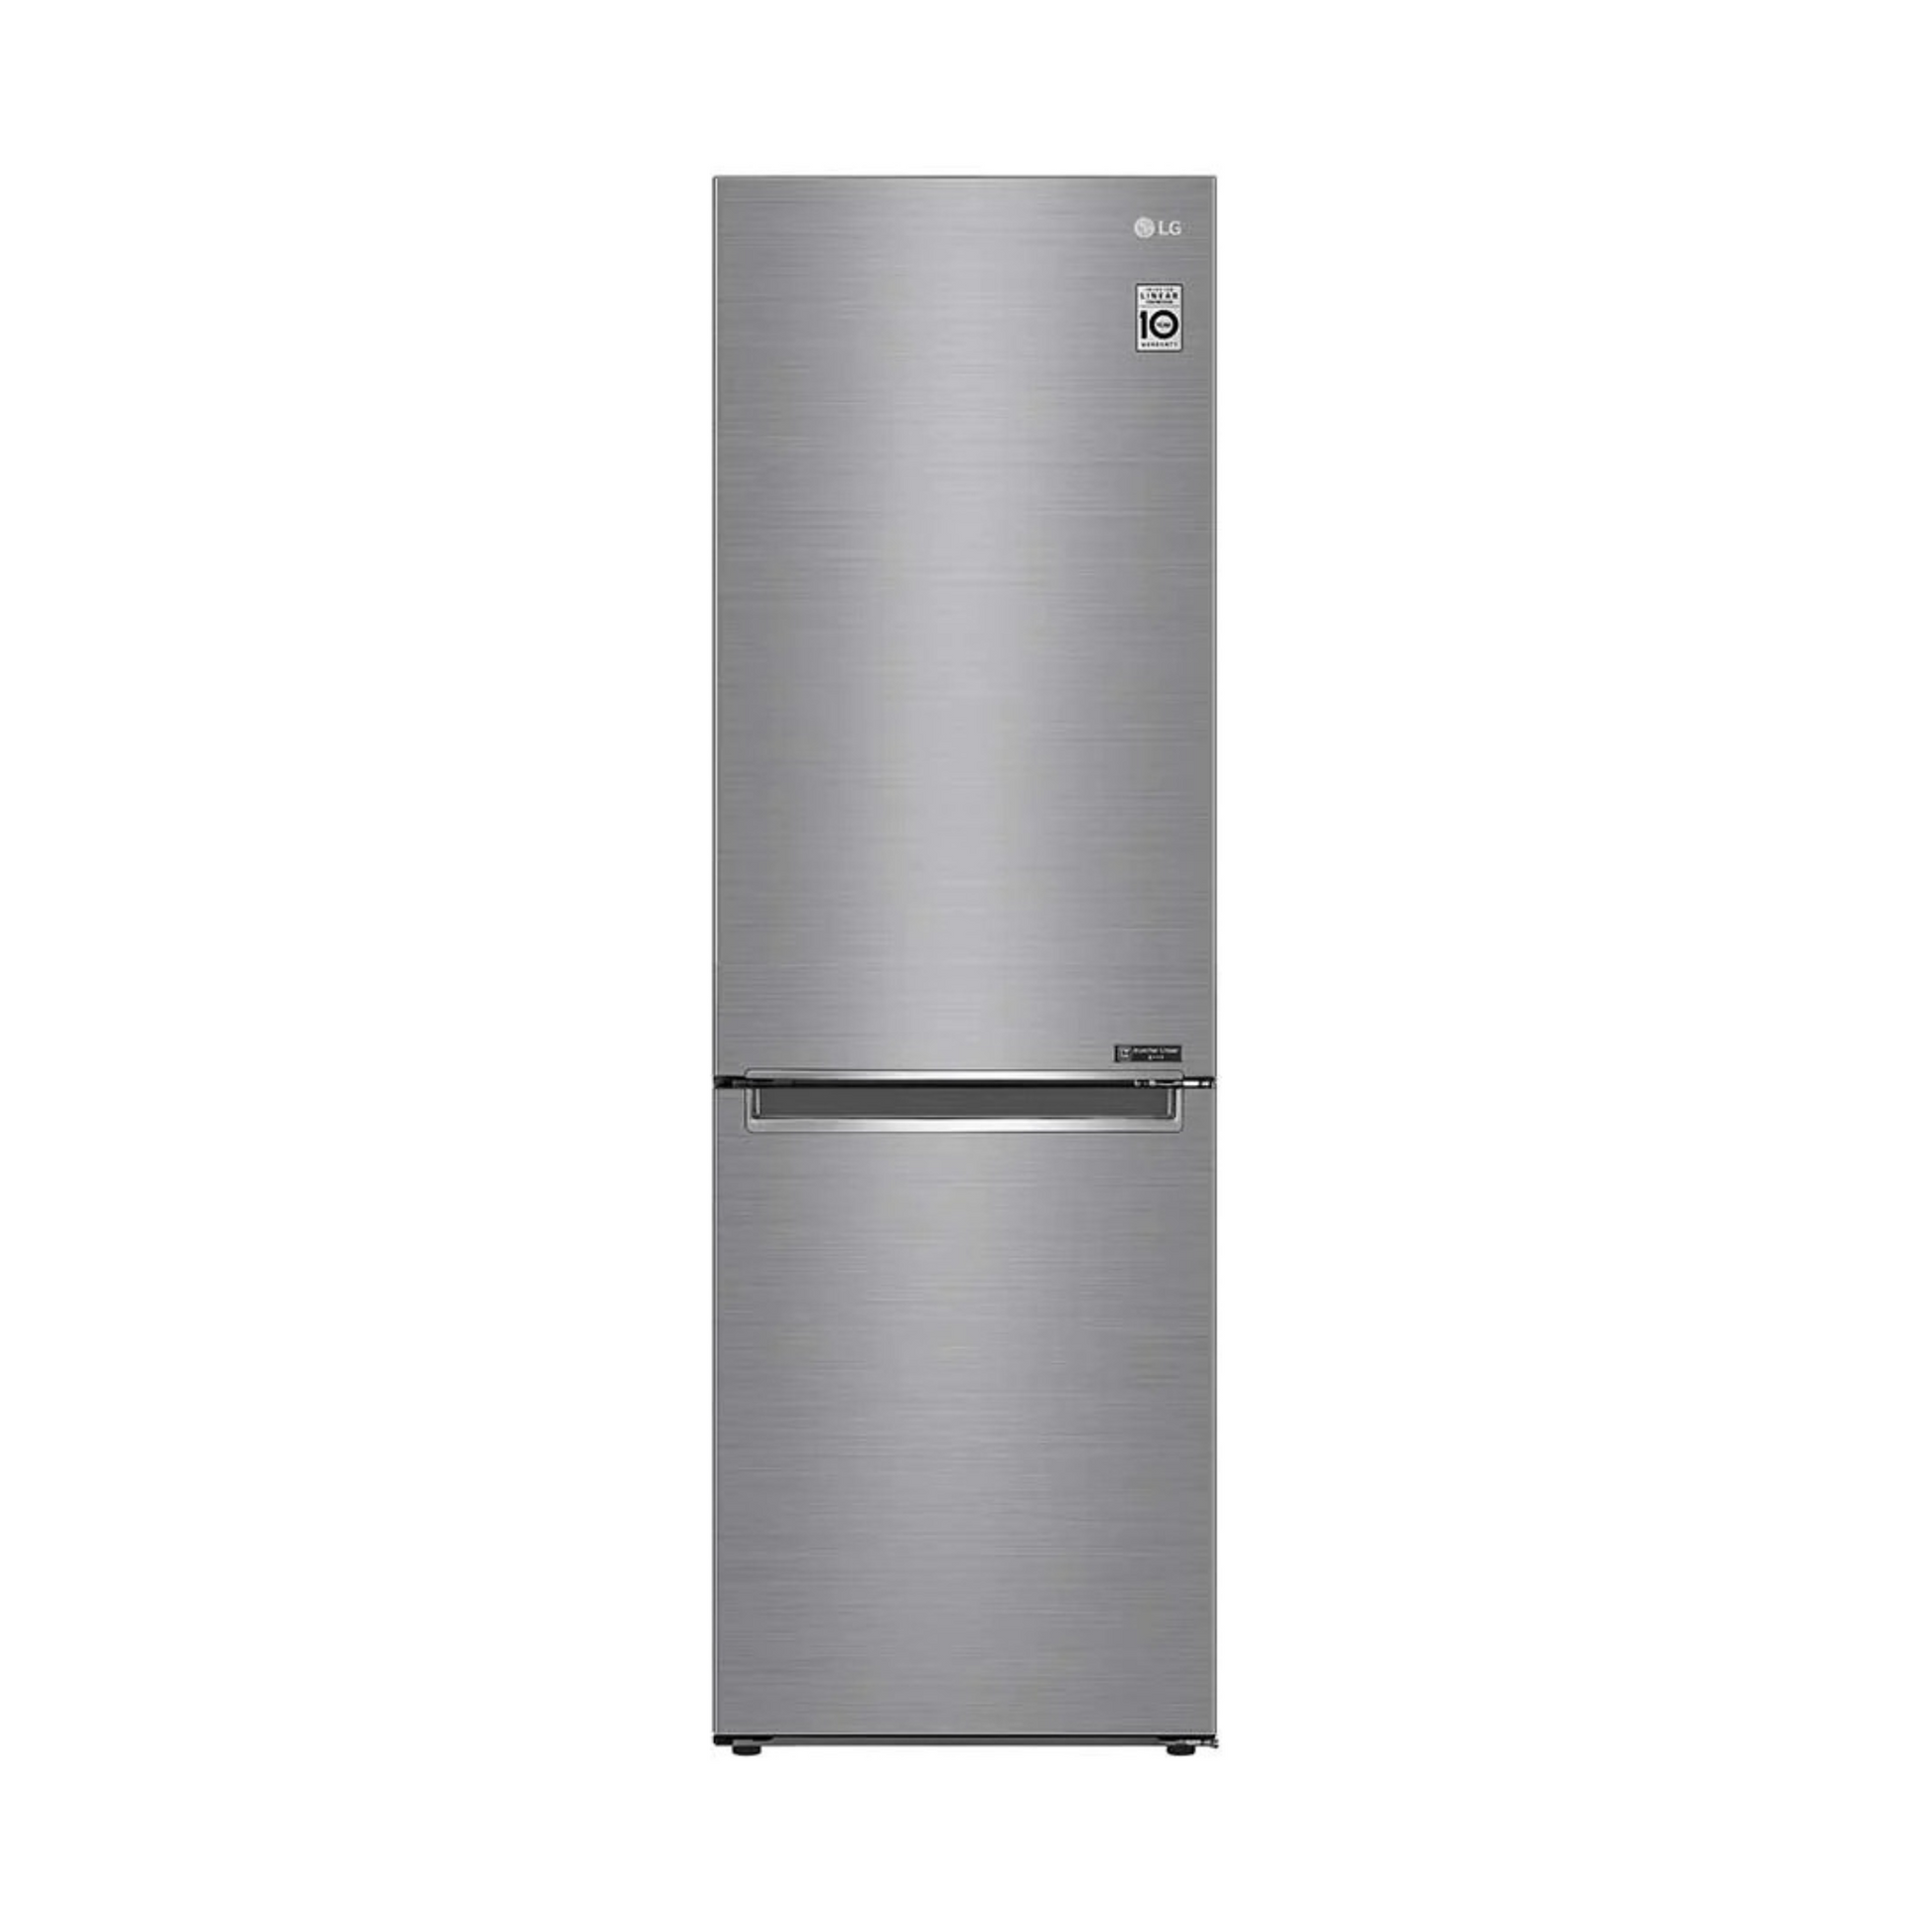 LG 341L Linear Inverter Refrigerator, GBB61PZGFN